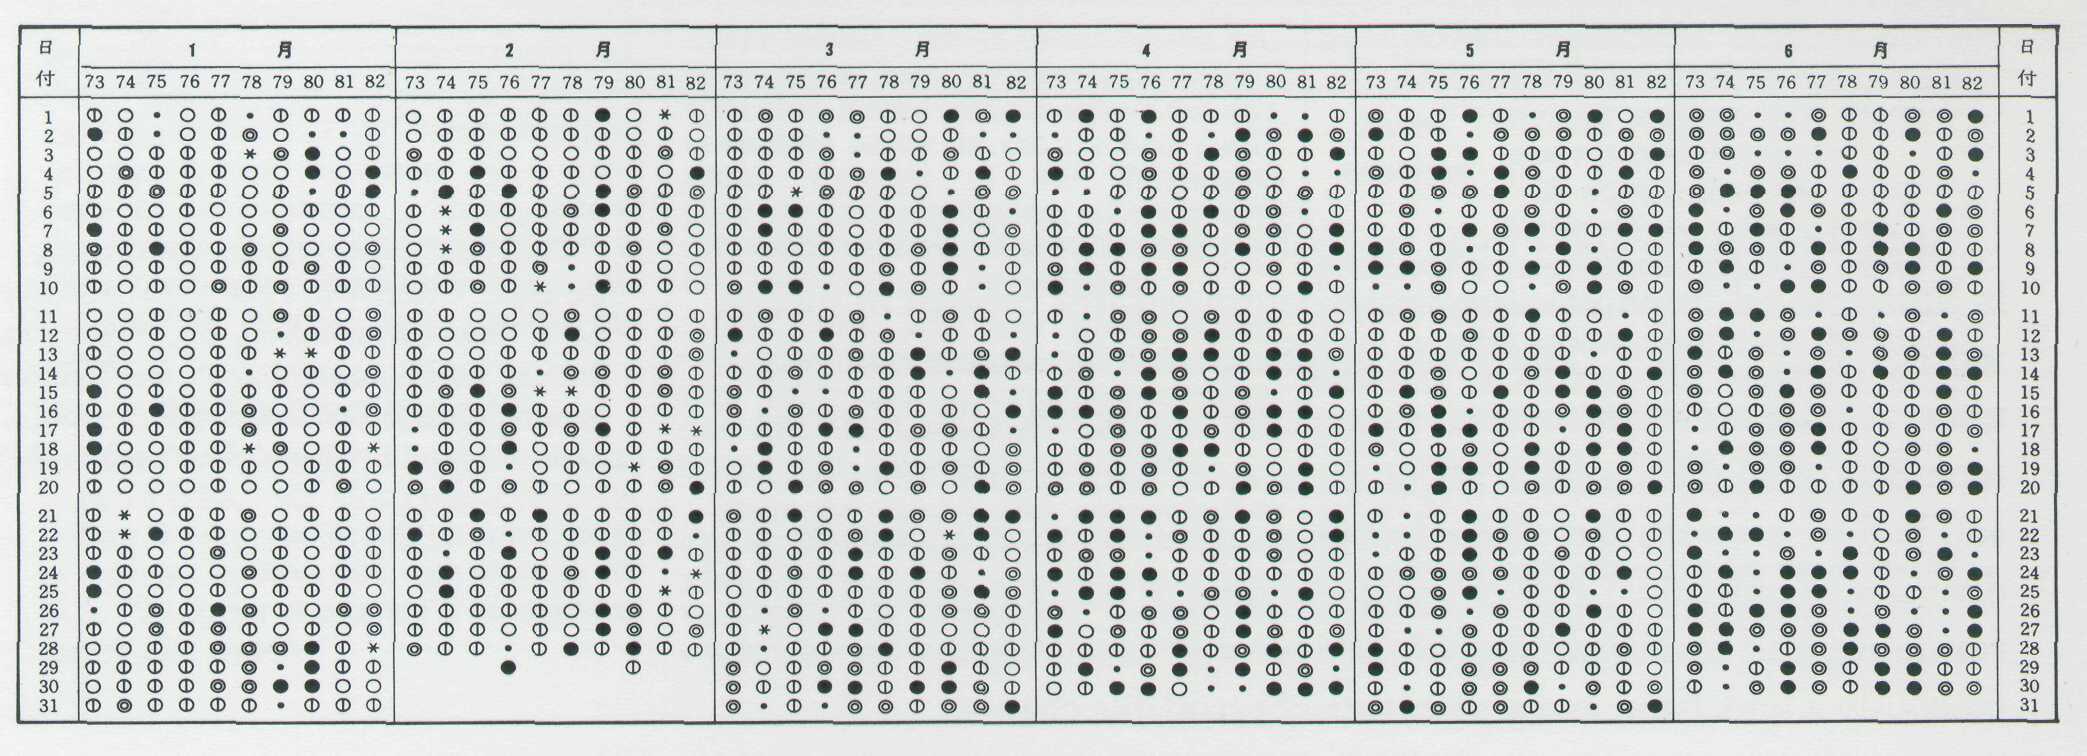 11. Kisho Nenkan 1984. Meteorological Almanac